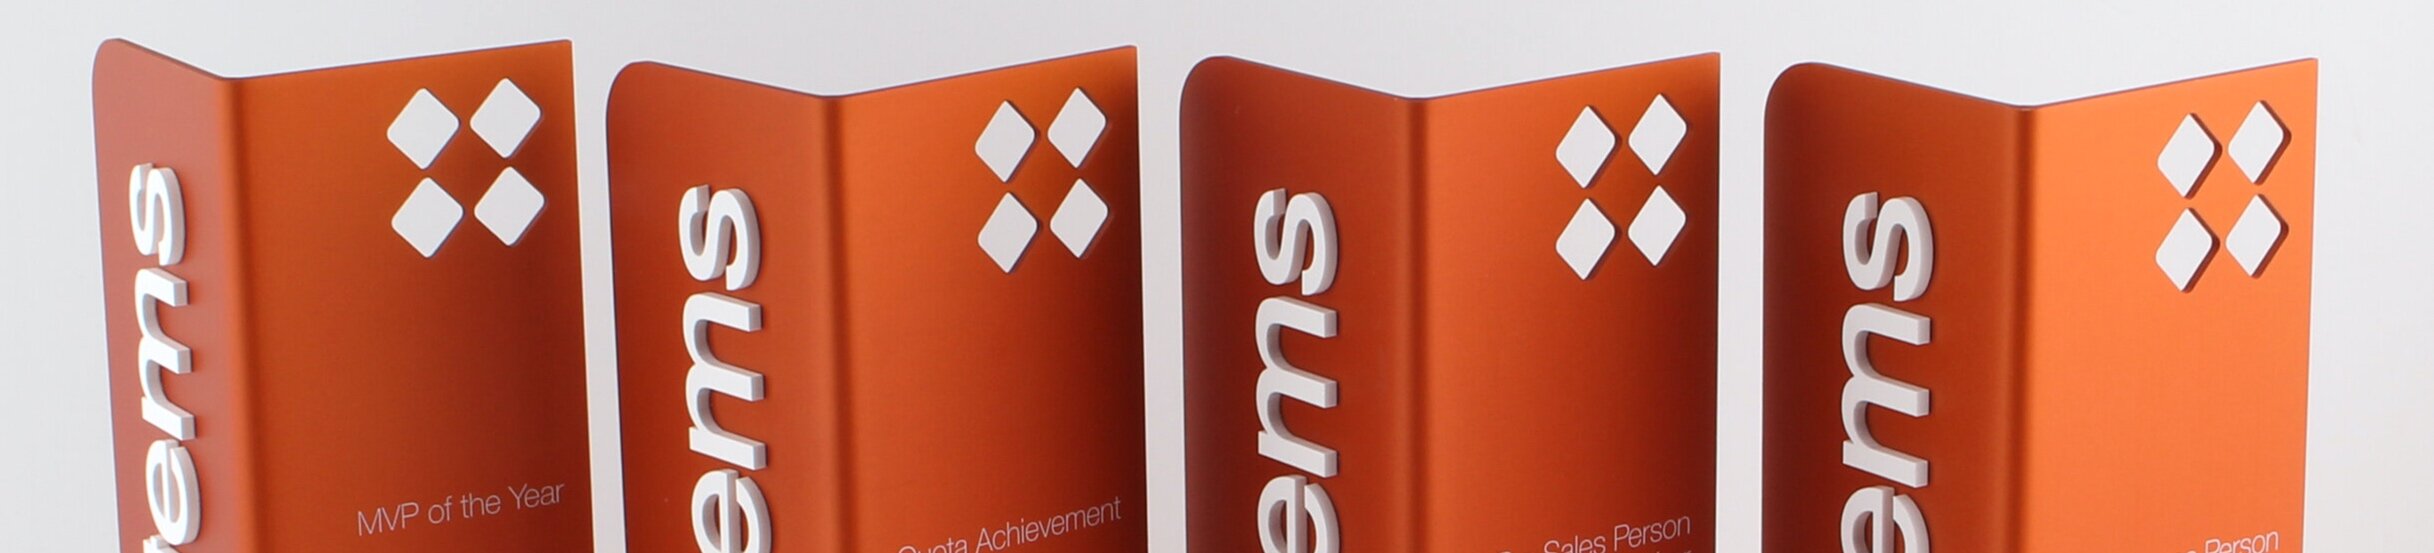 stibo-systems-achievement-awards-branded-design-3.jpg